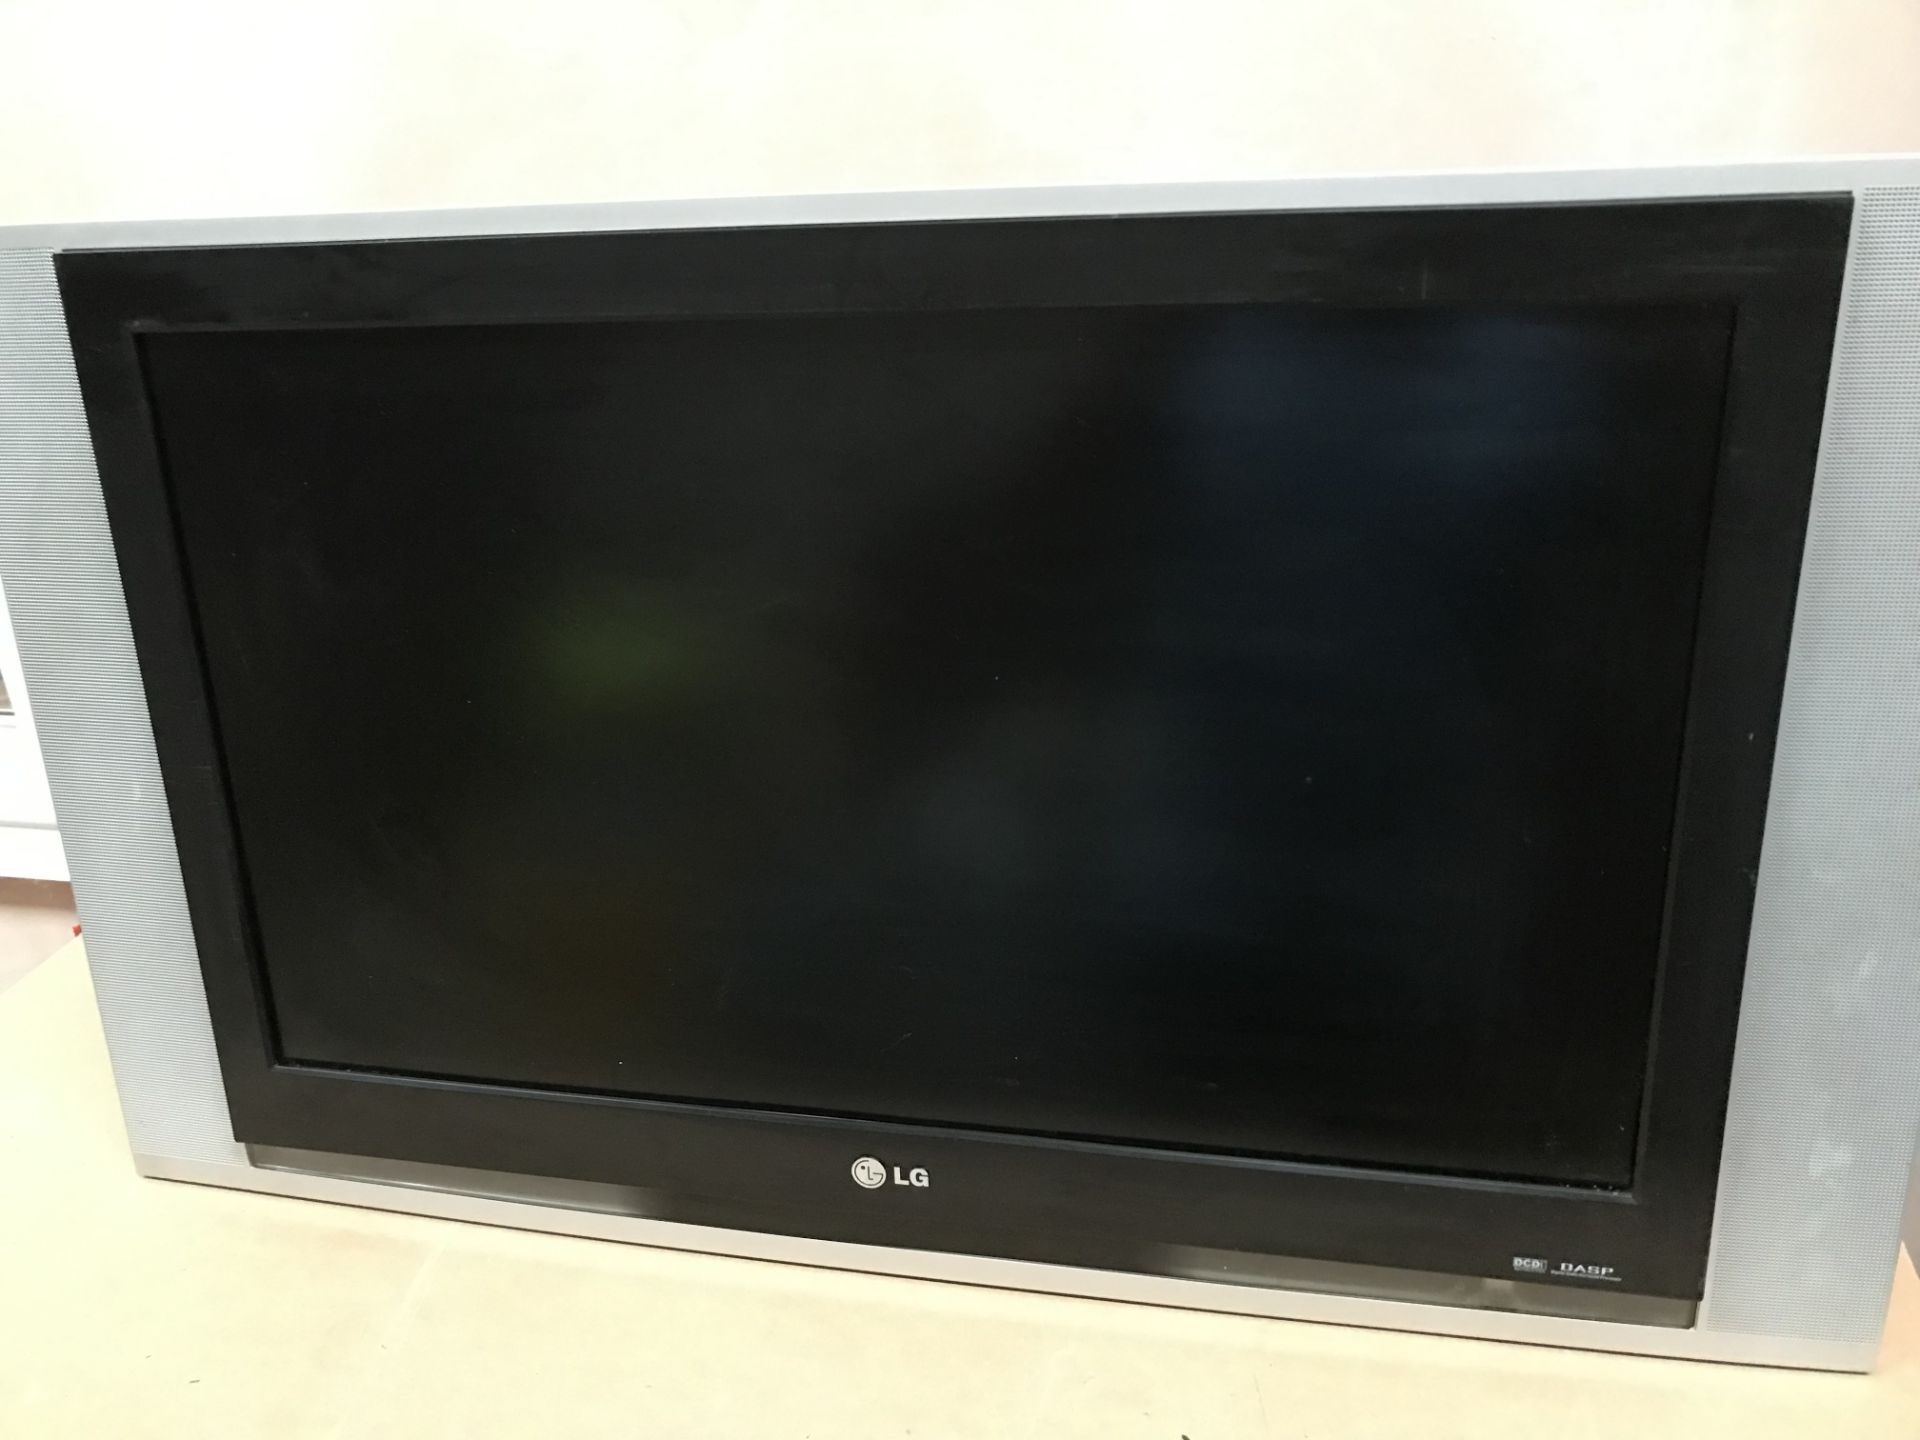 LG - LCD TV - Image 2 of 4